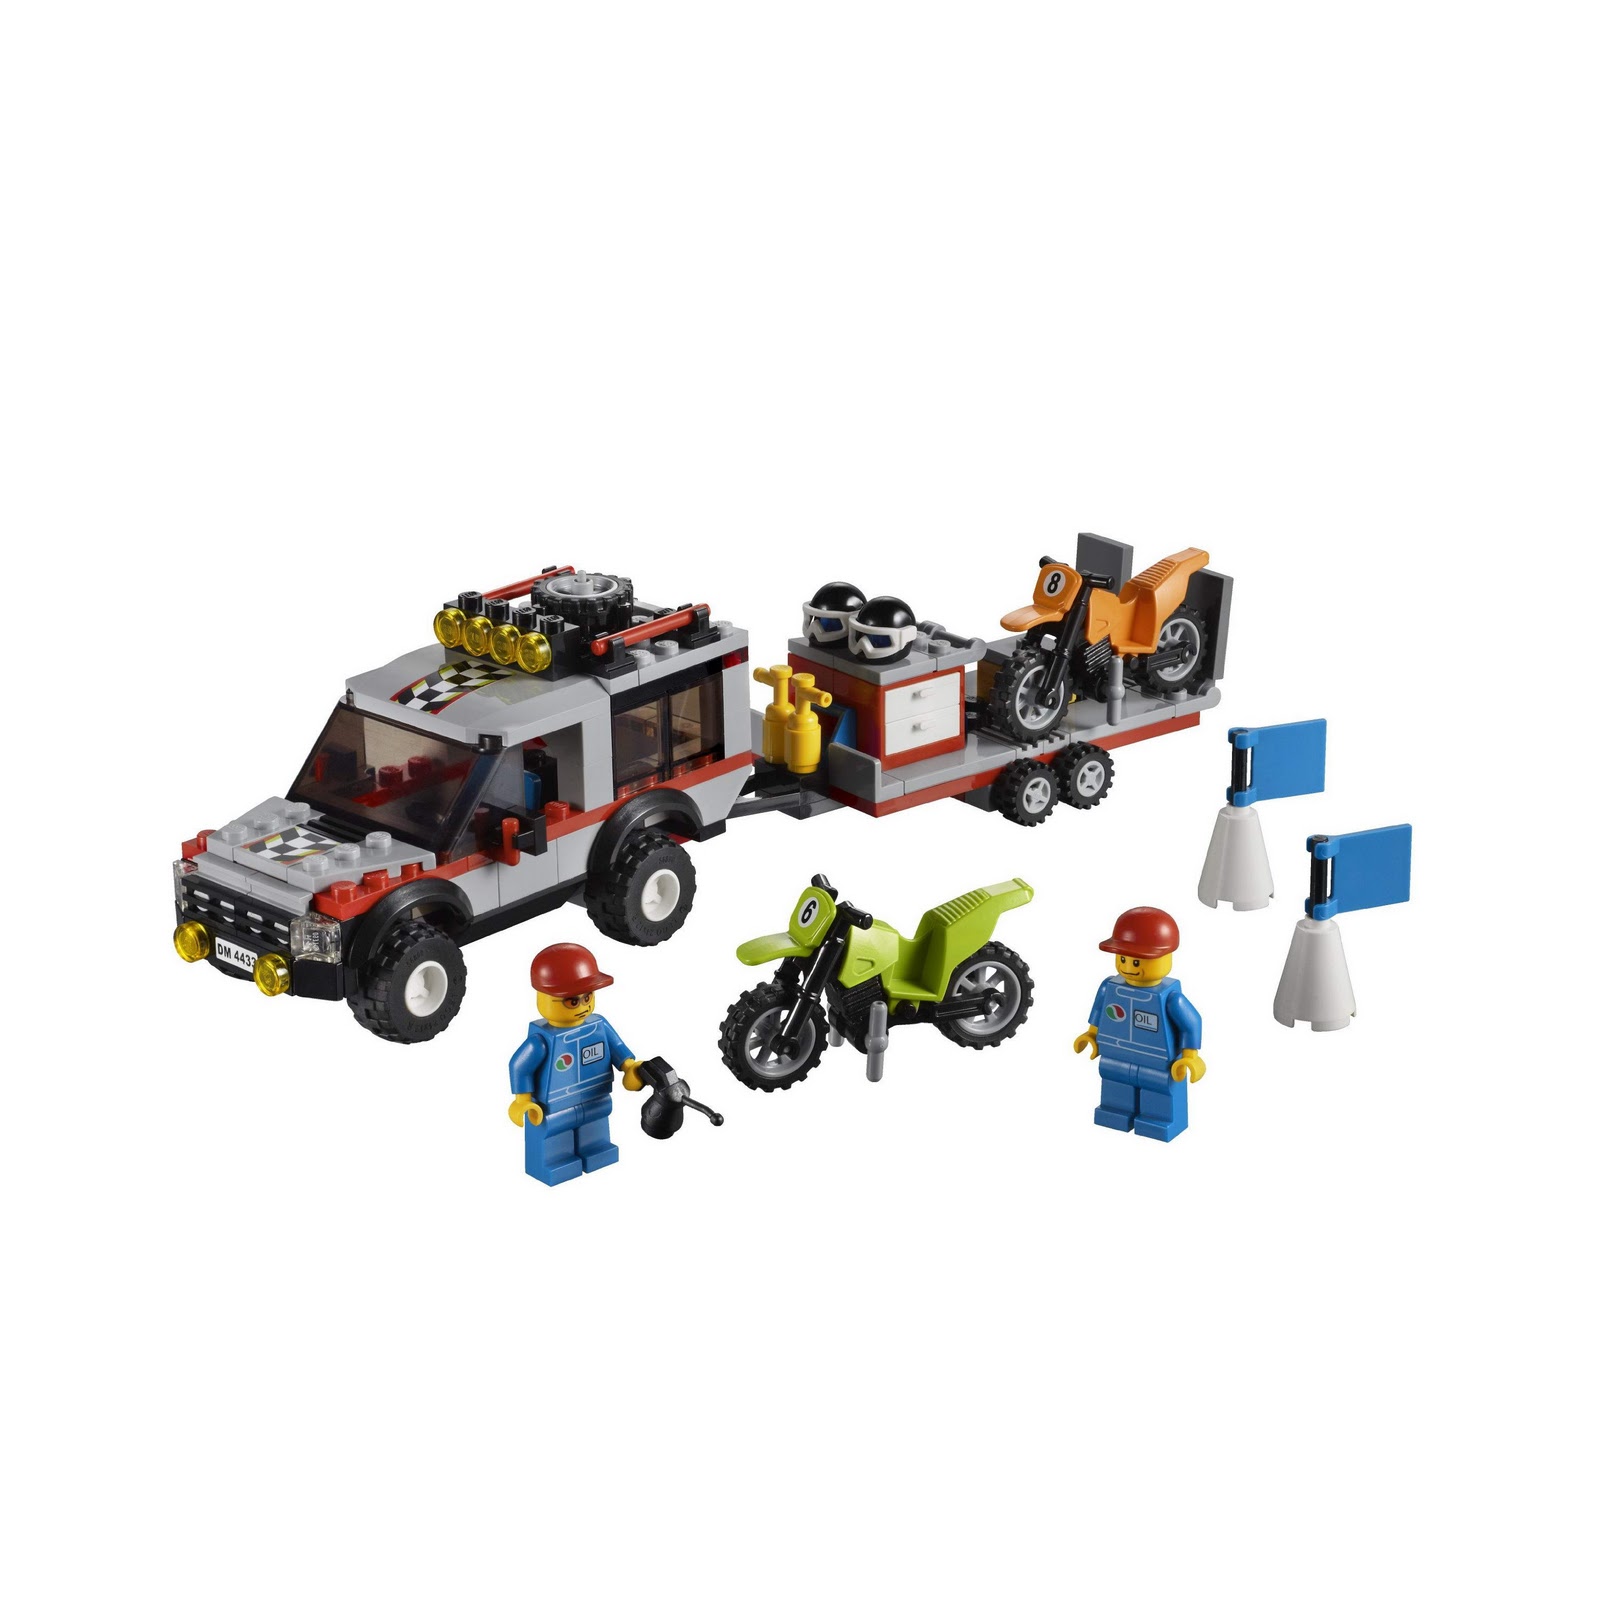 oneTWOBRICK.com: set database: LEGO 4433 dirt bike transporter